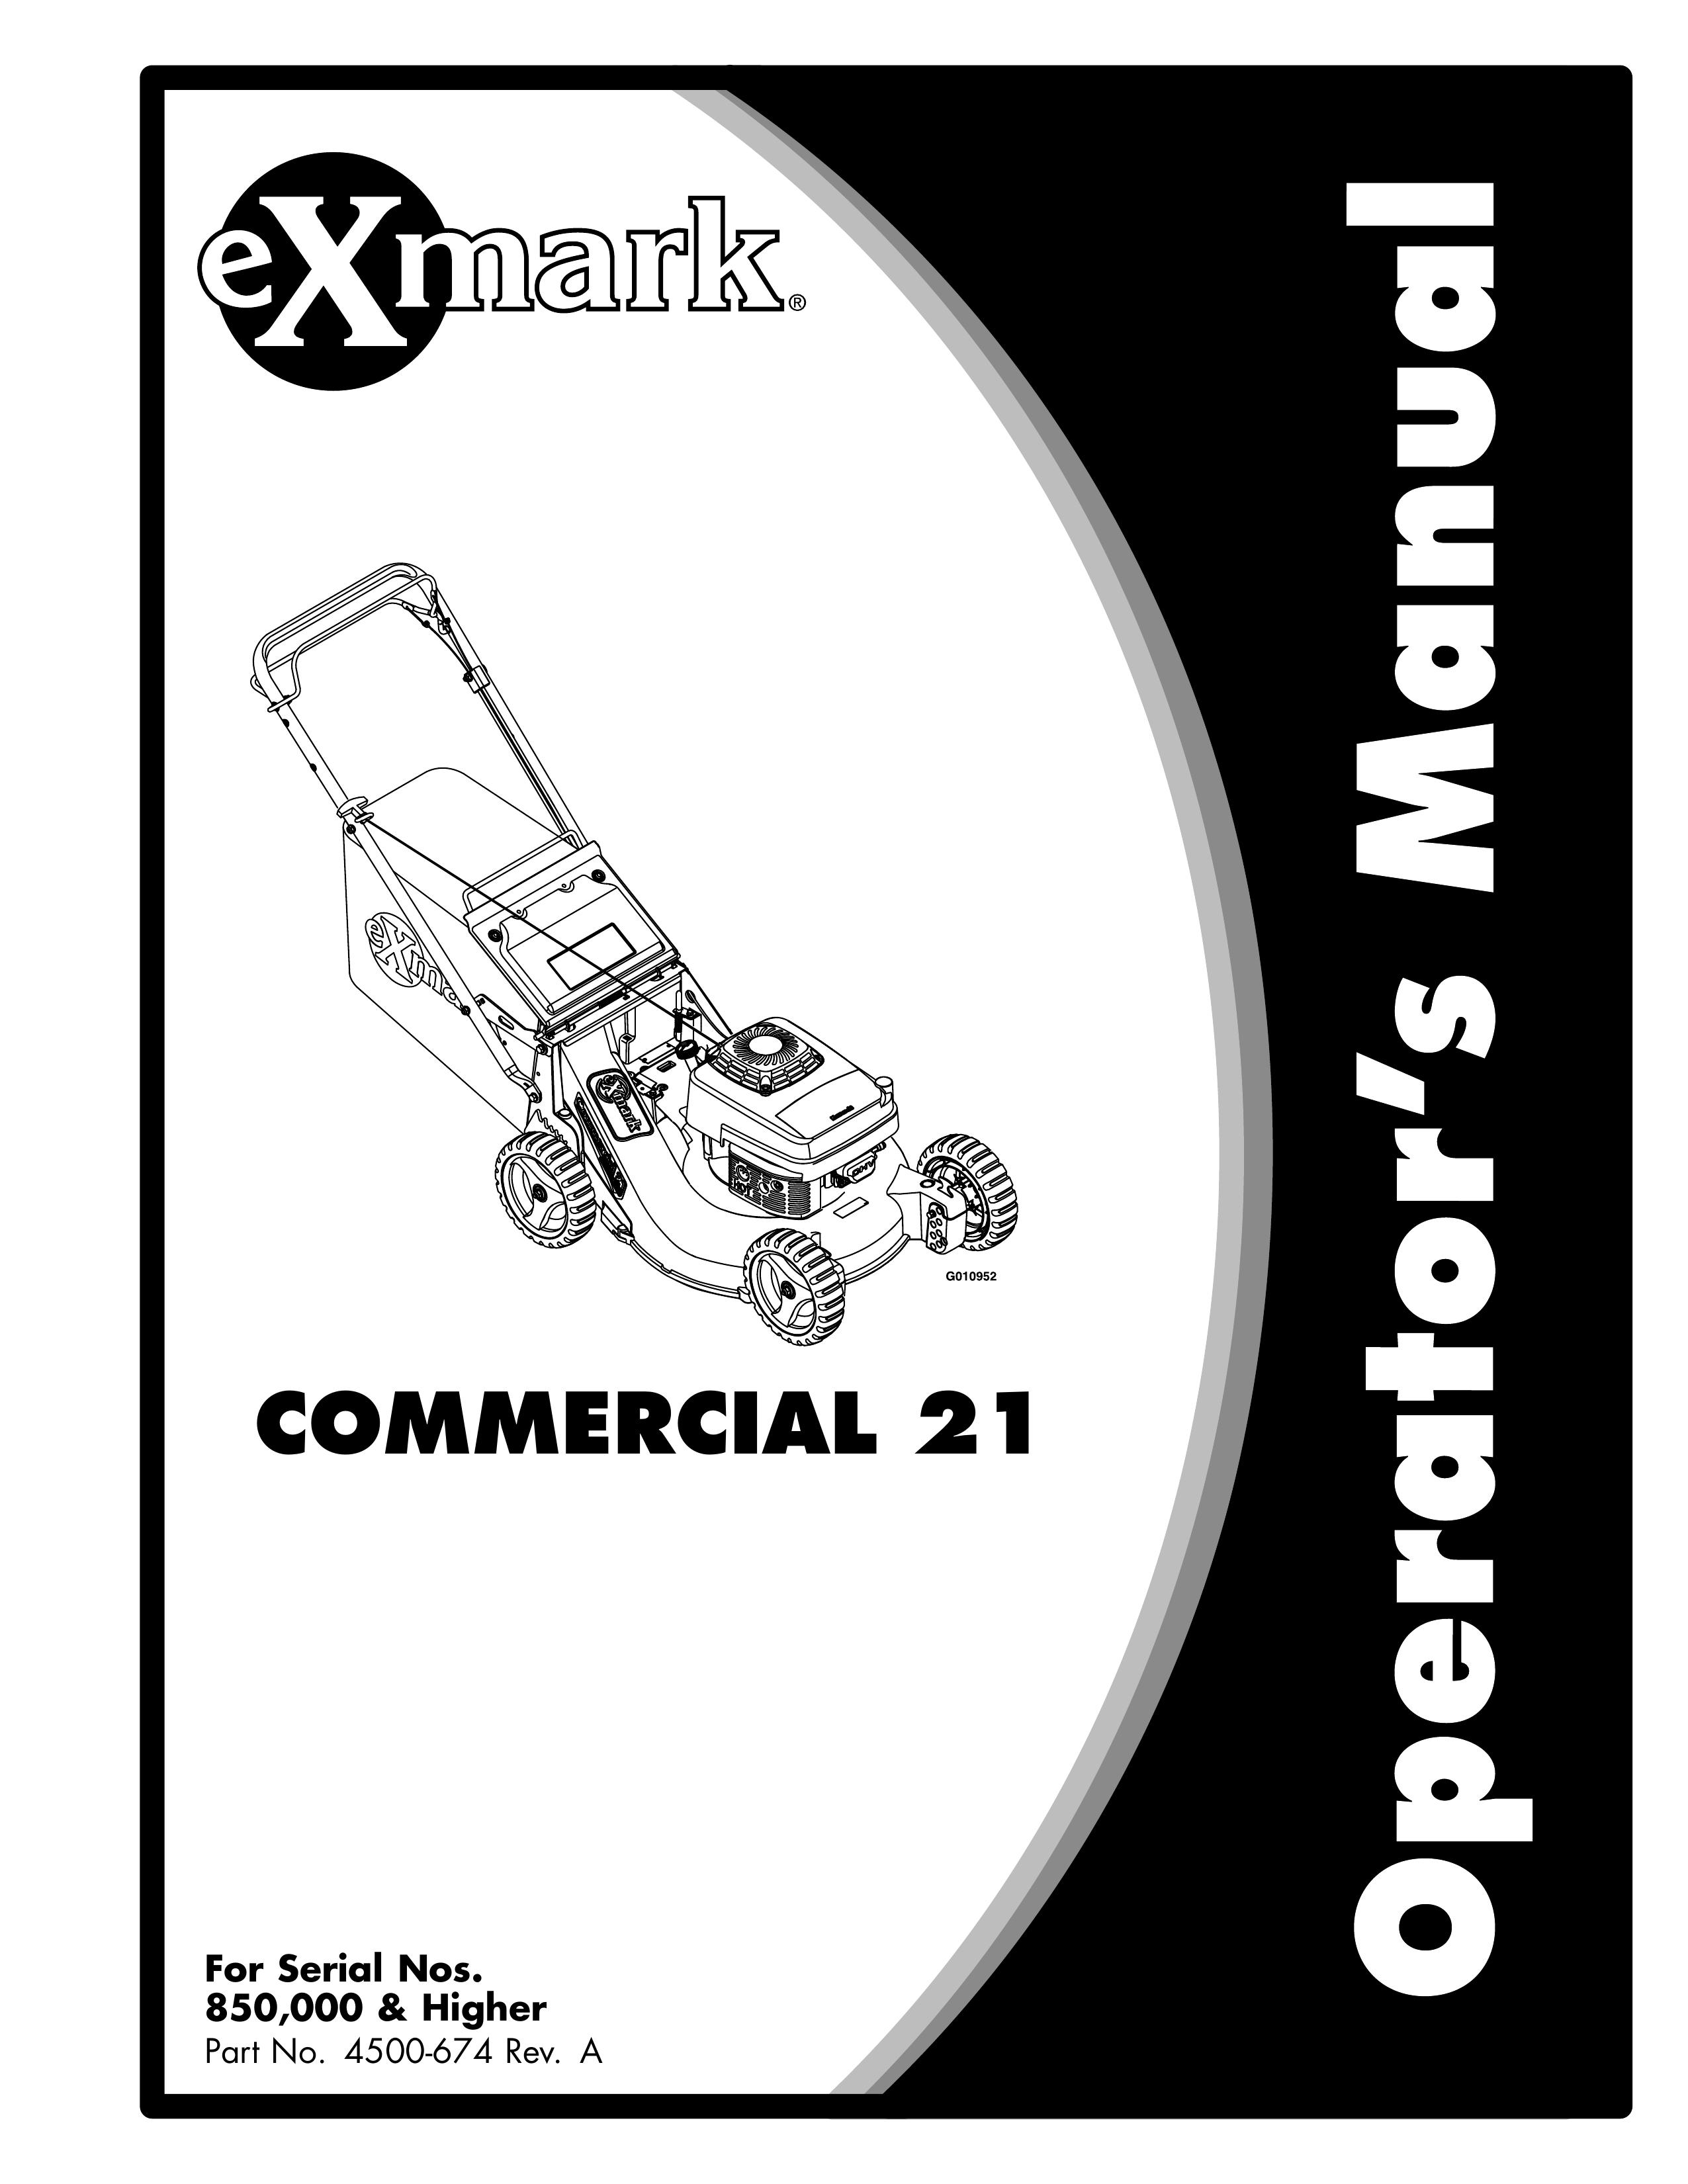 Exmark 000 & higher Lawn Mower User Manual